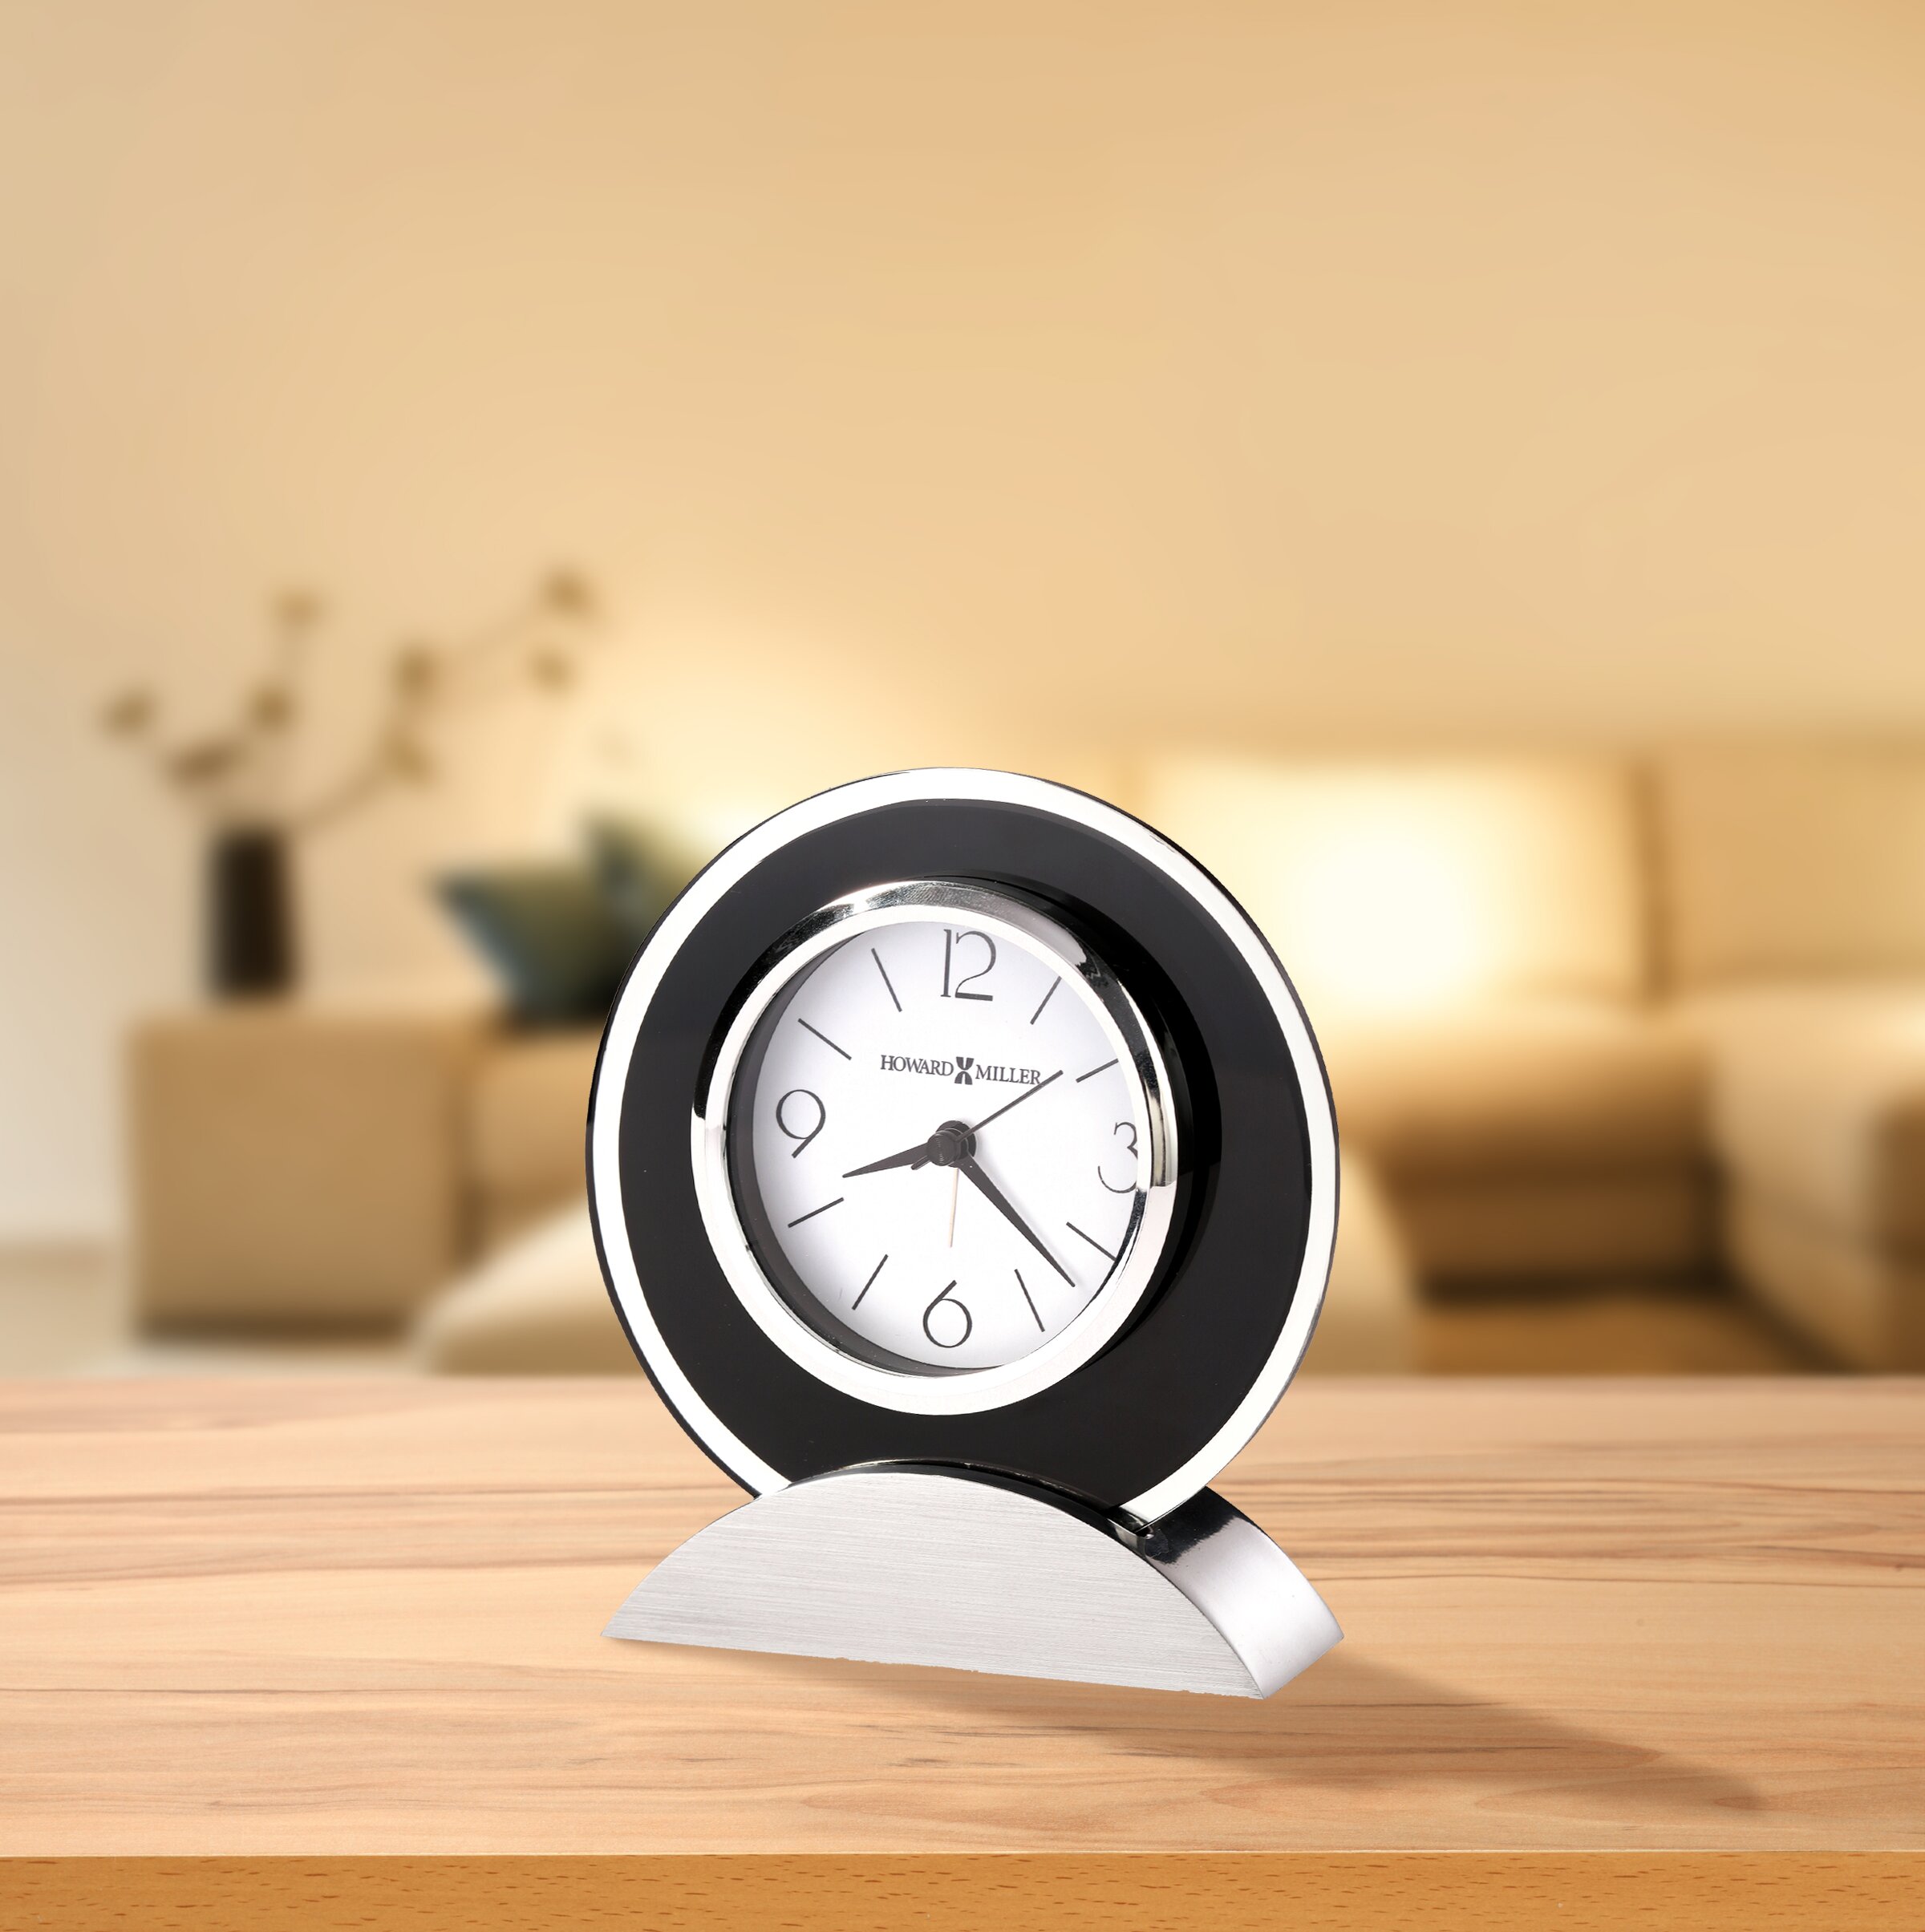 Howard Miller Dexter Tabletop Alarm Clock Reviews Wayfair